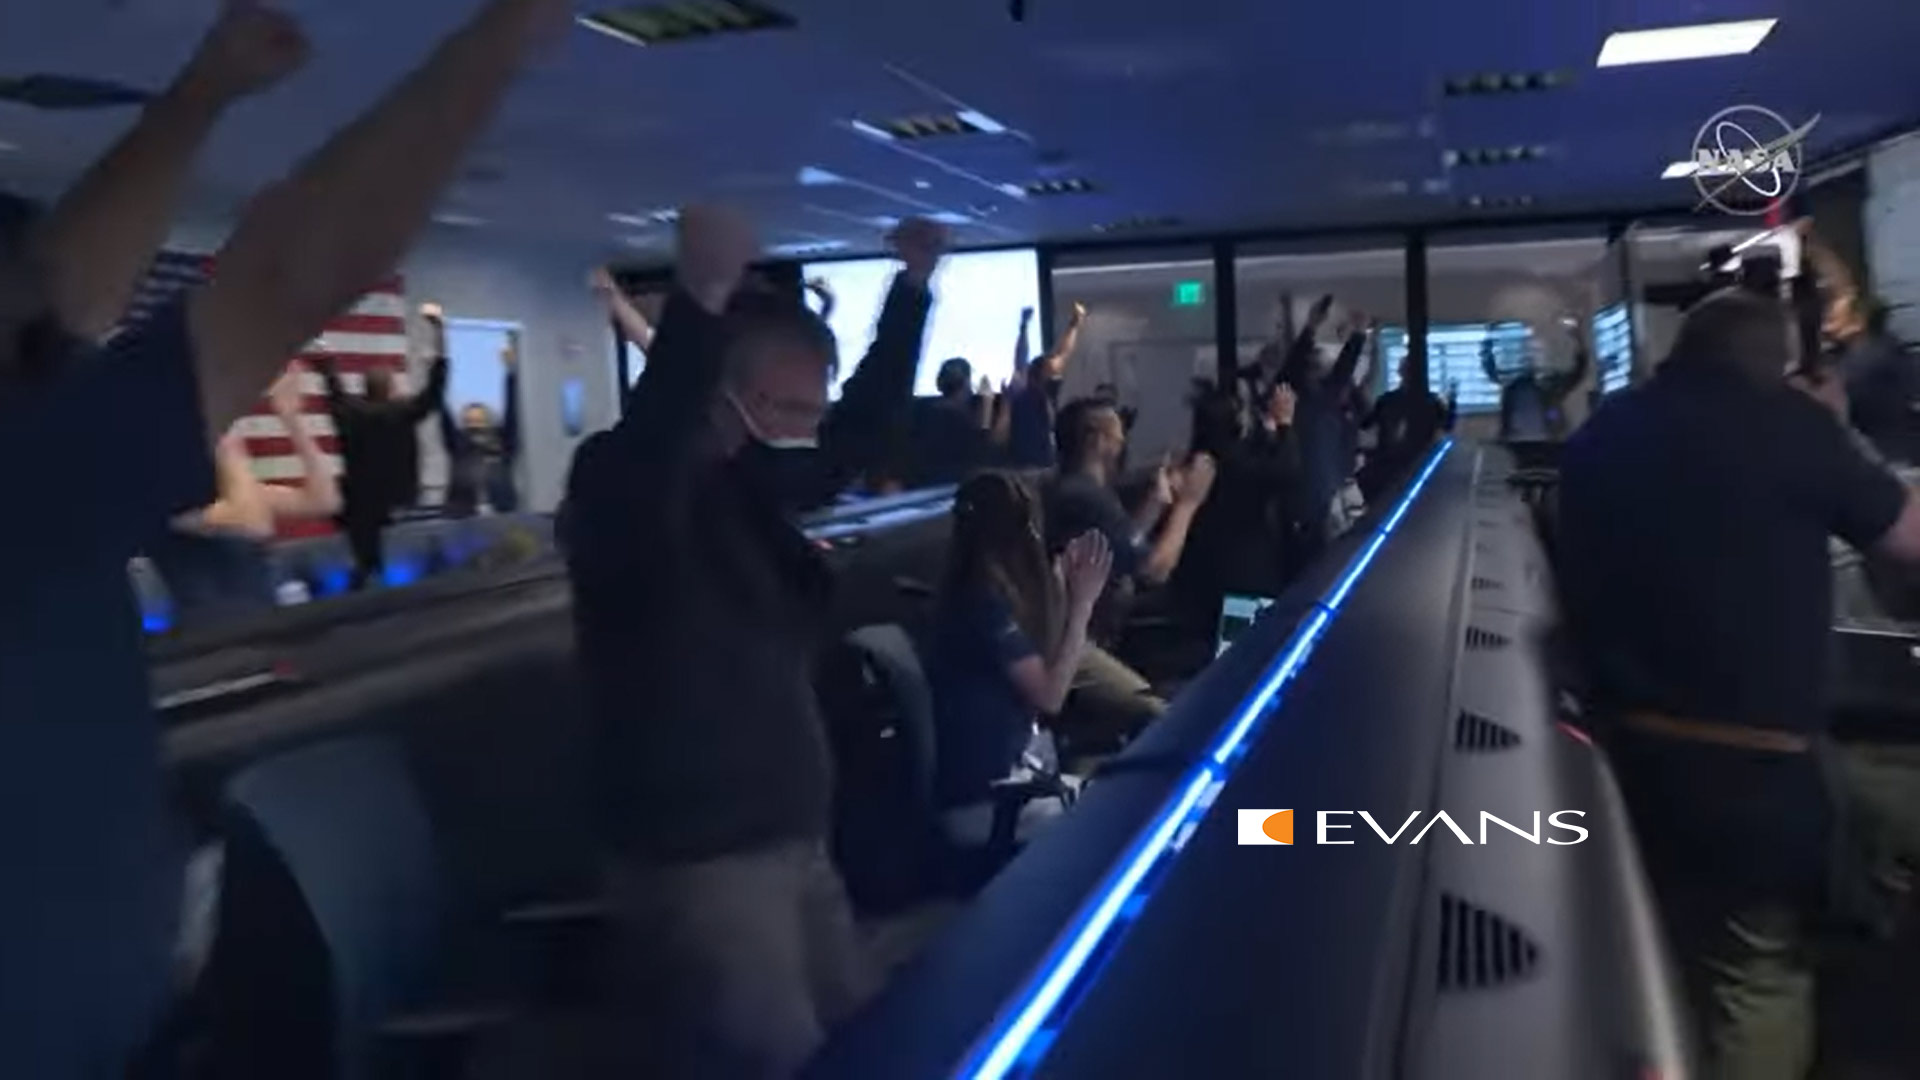 JPL-celebration-image-evans-consoles-perseverance-rover-mars-landing-success-evans-control-room